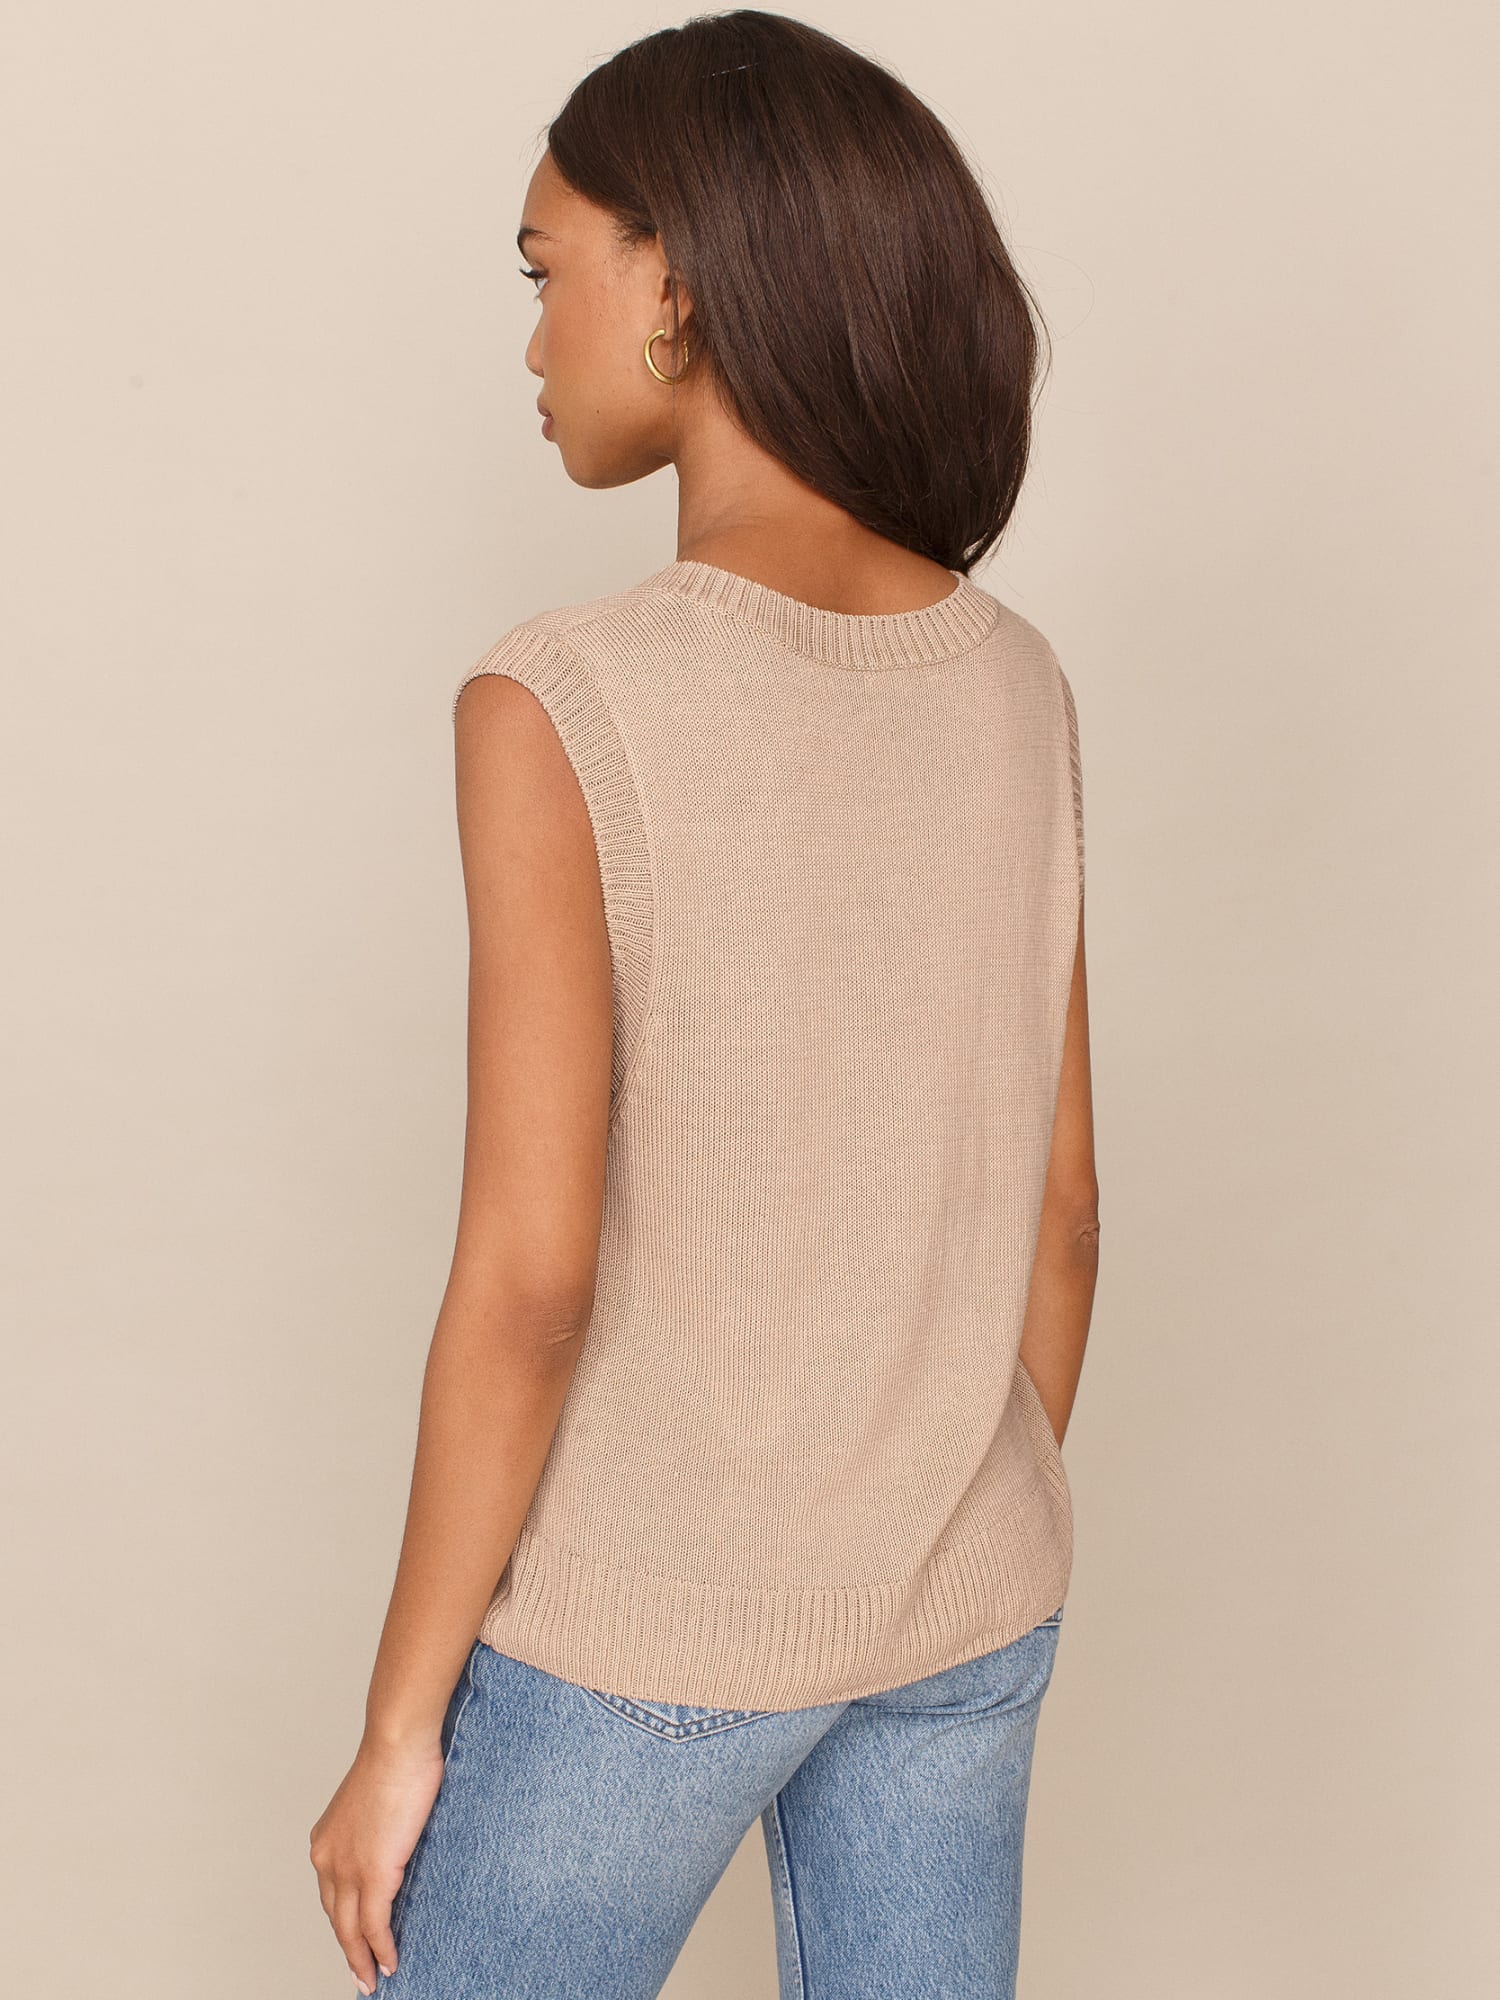 The Kristen Sweater Vest: Lightweight Knit Sleeveless Sweater–  MomQueenBoutique